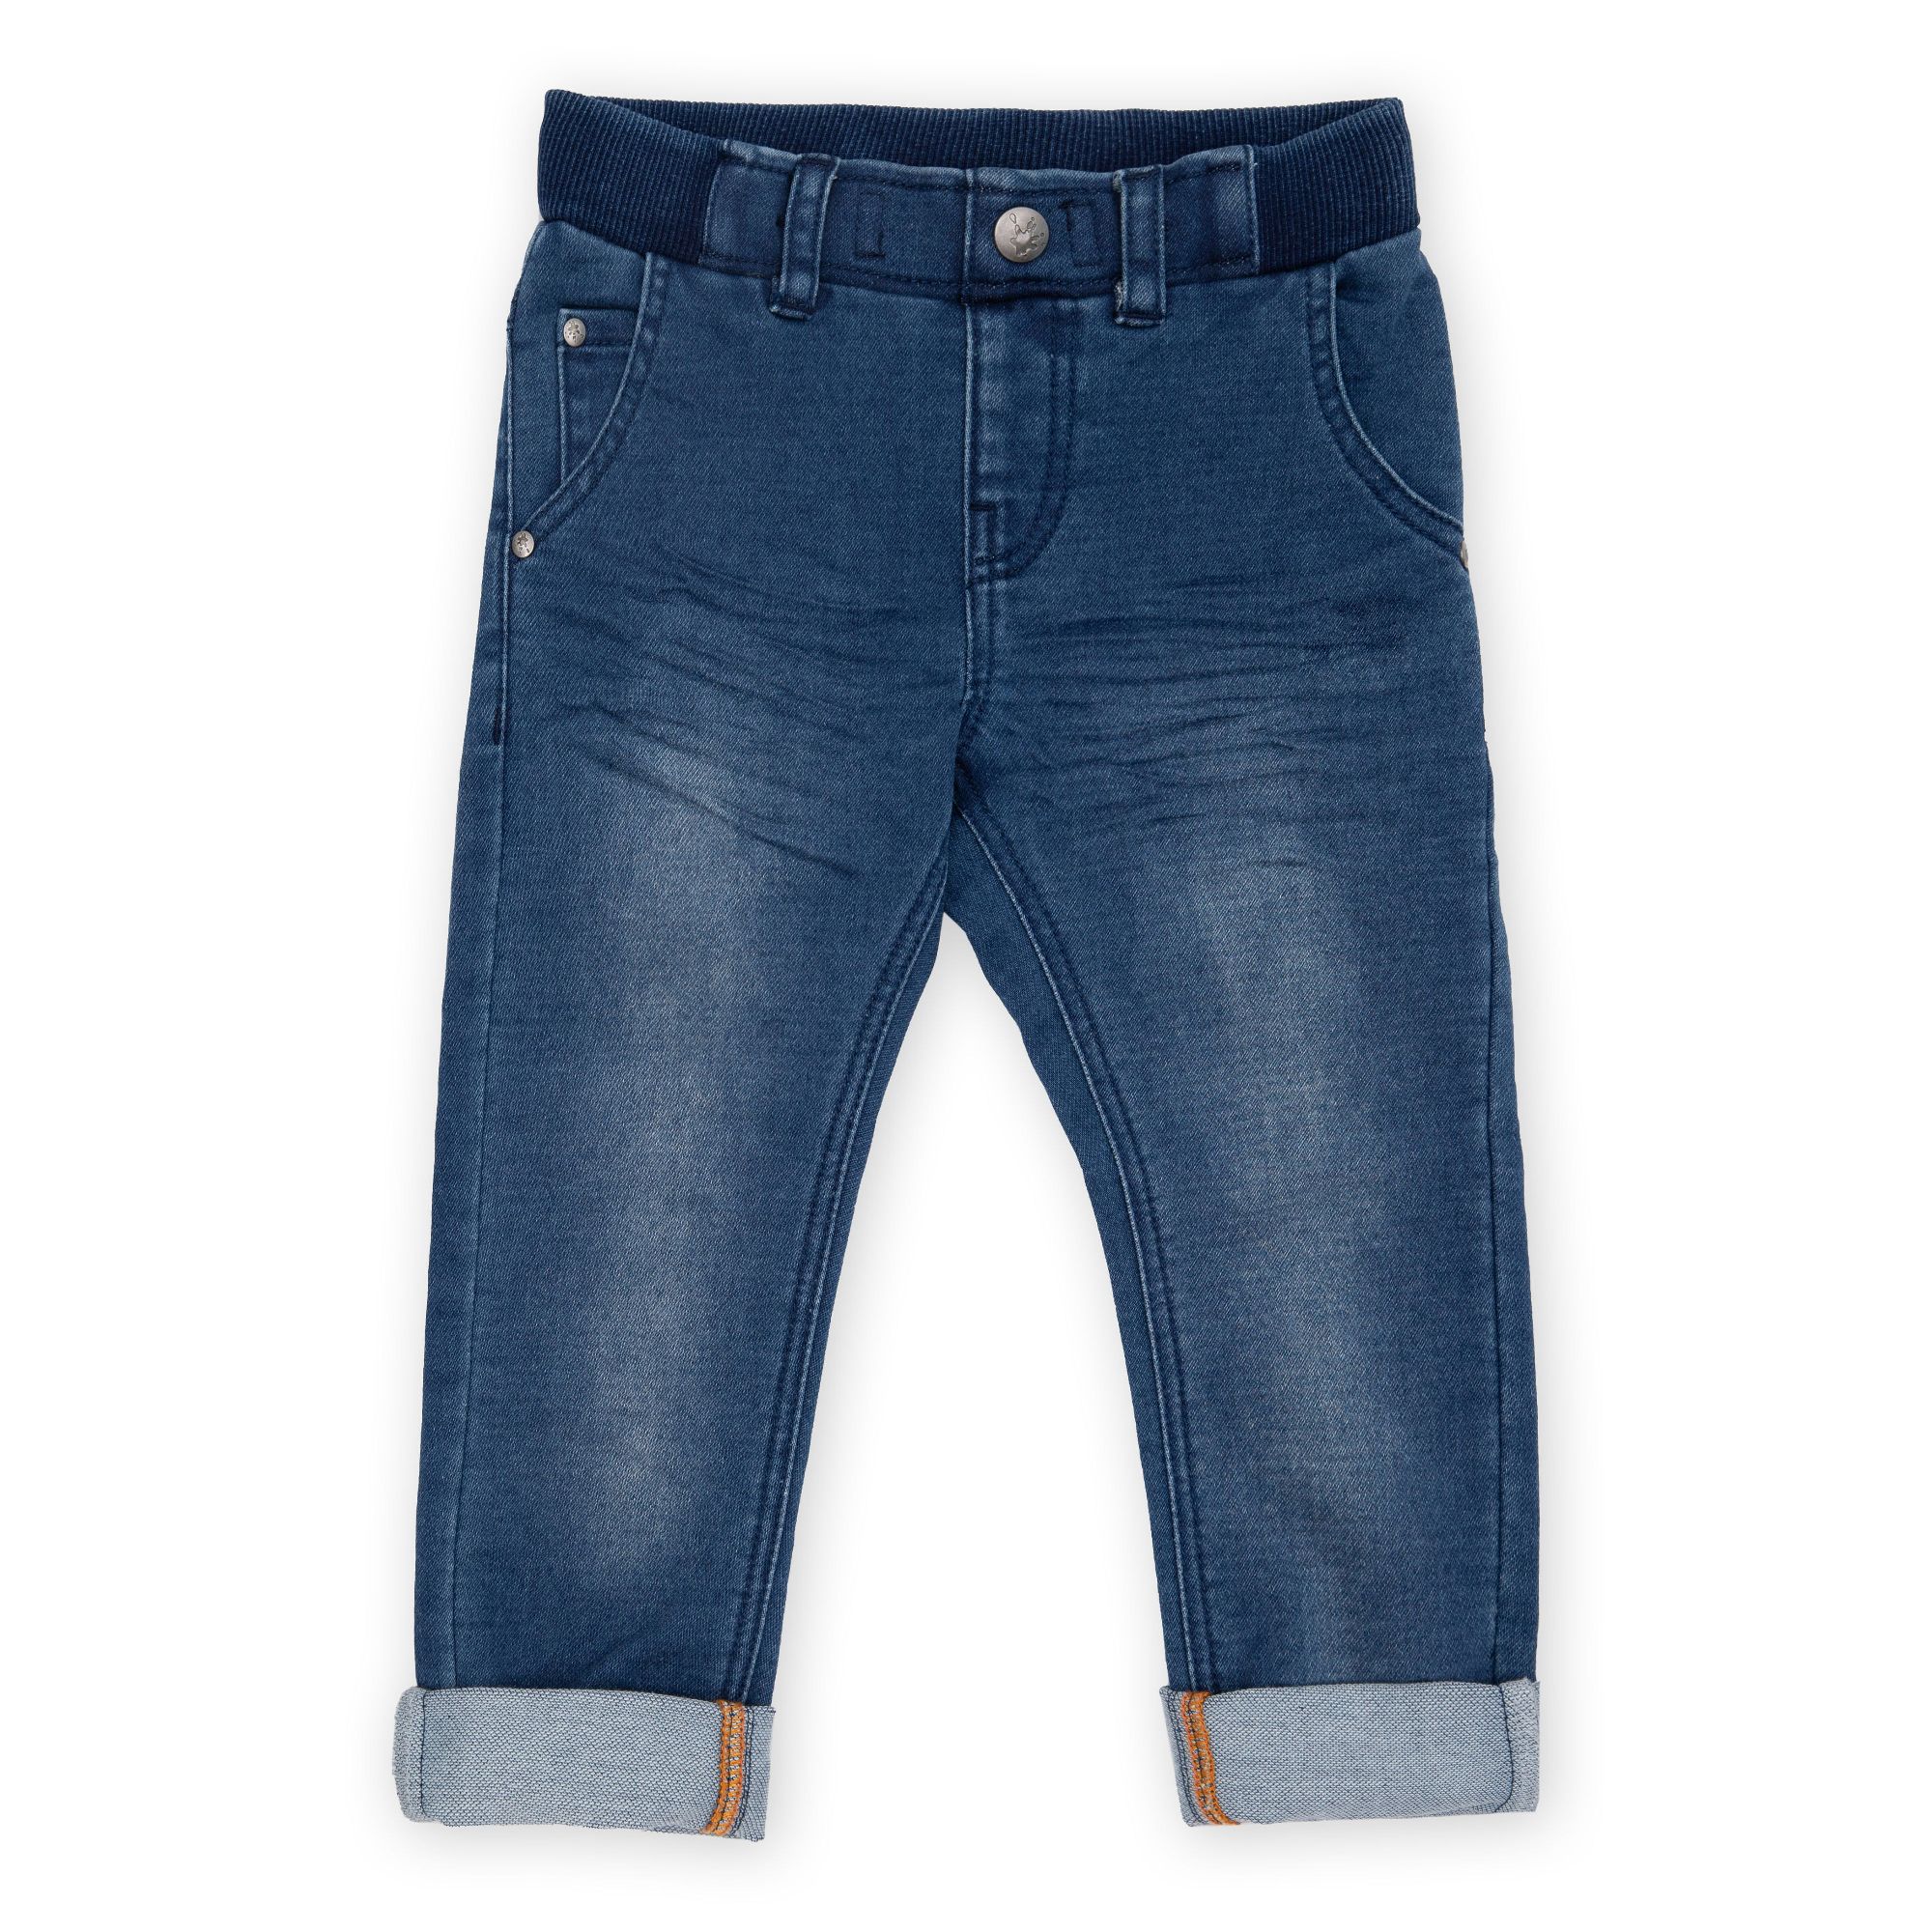 Jeans for children, adjustable, dark blue